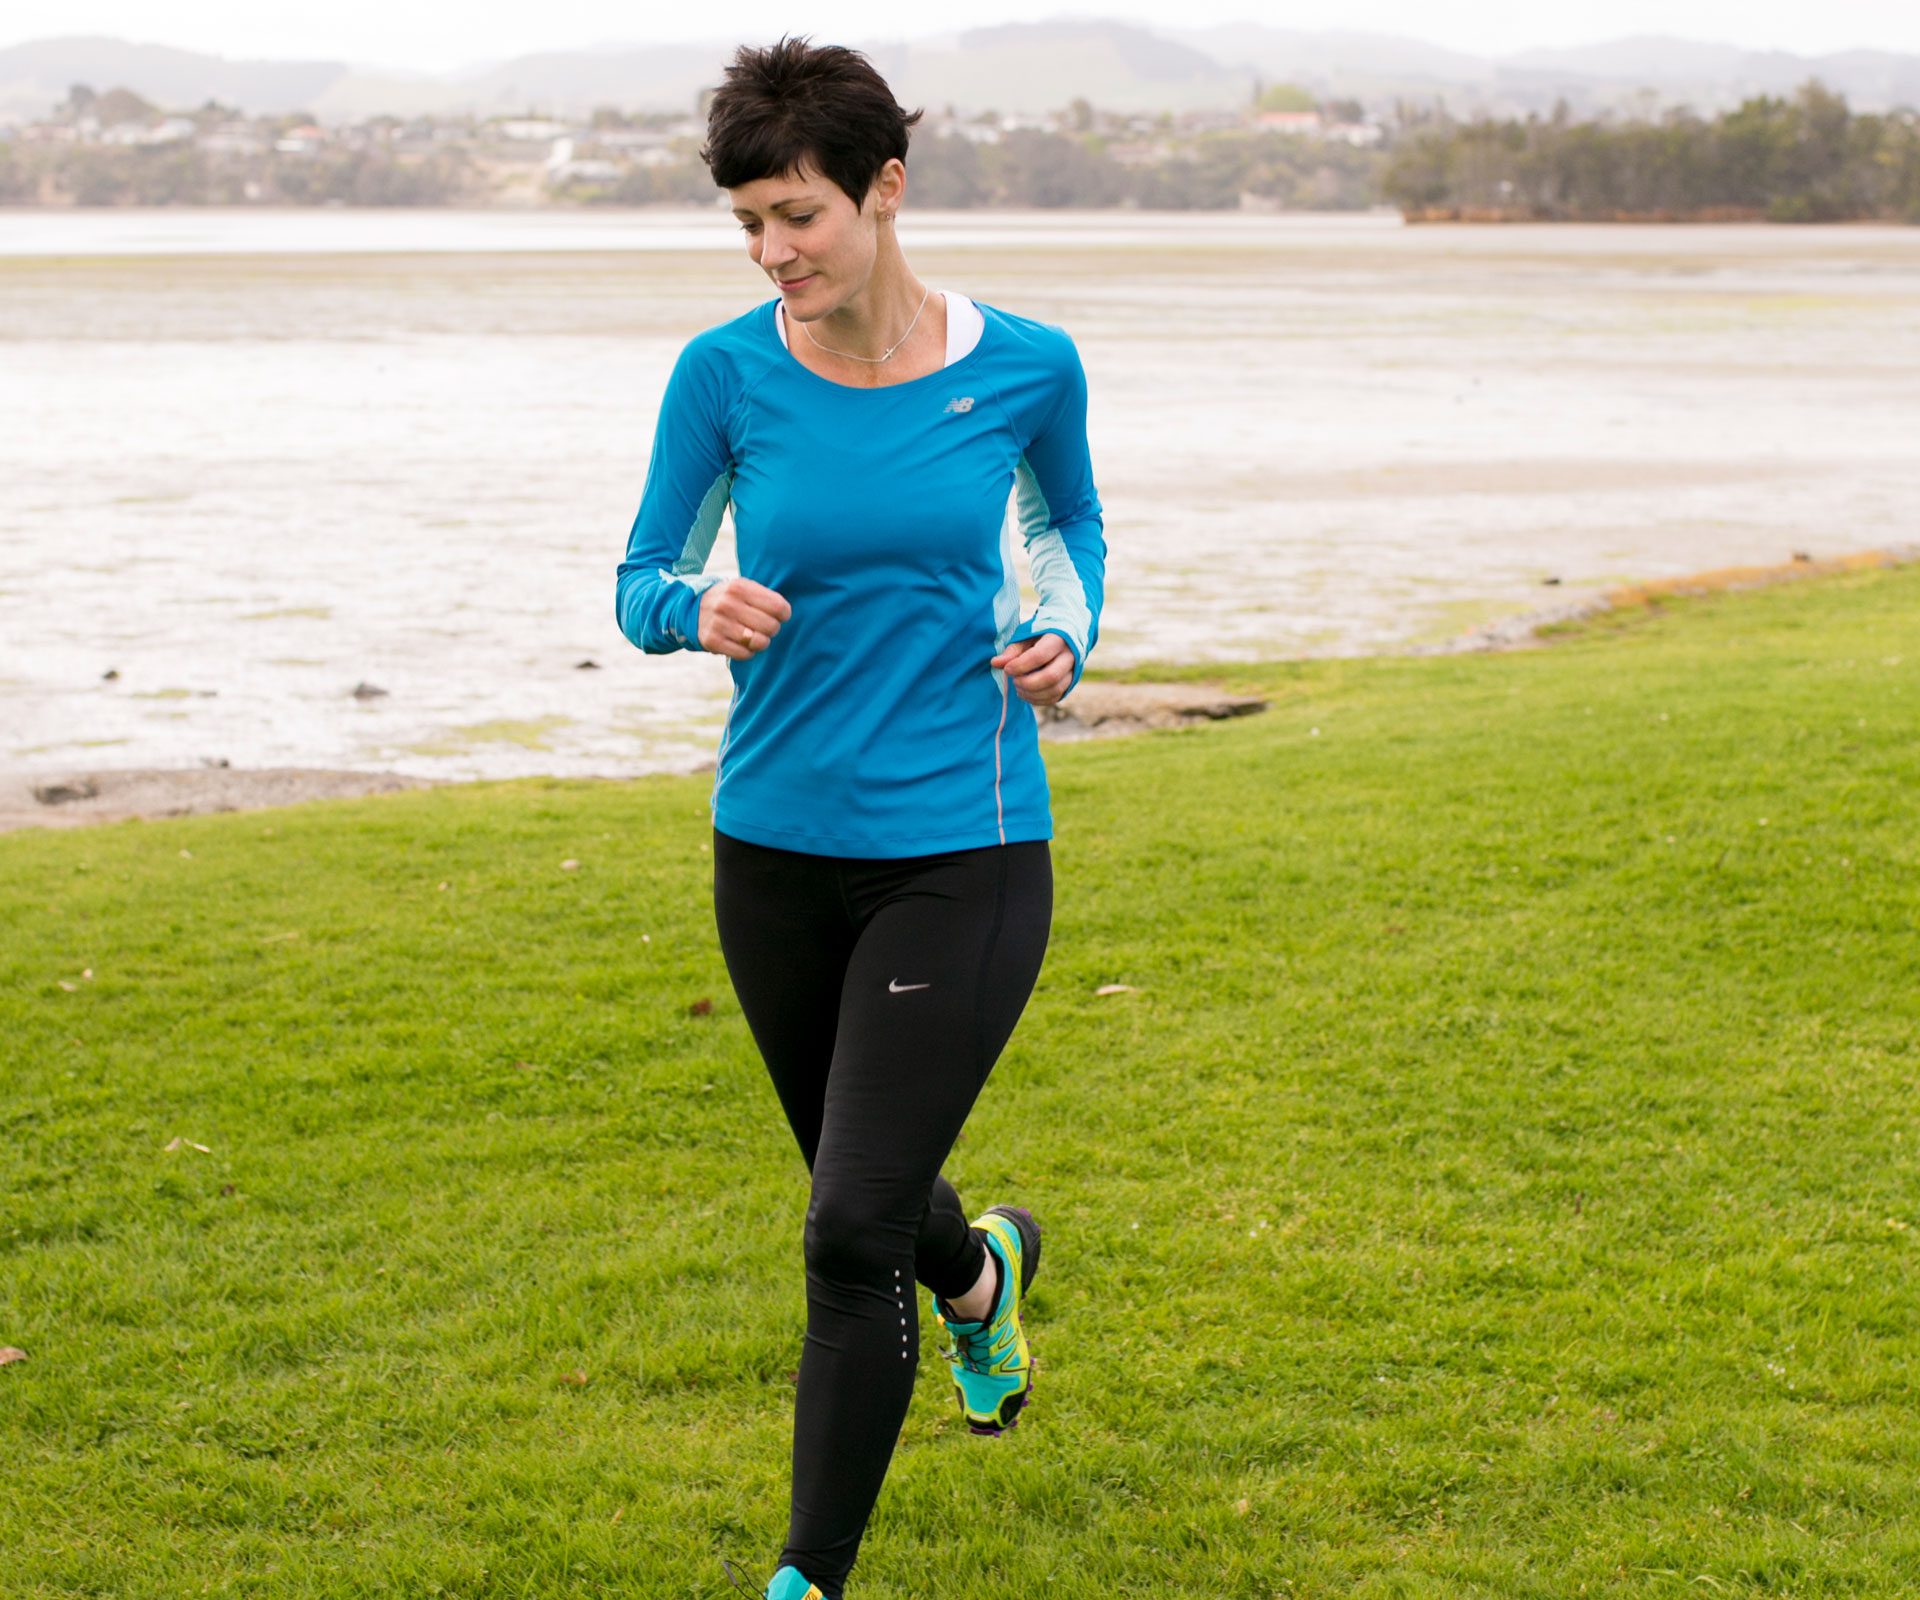 Kiwi mum with chronic arthritis completes ‘world’s coolest marathon’